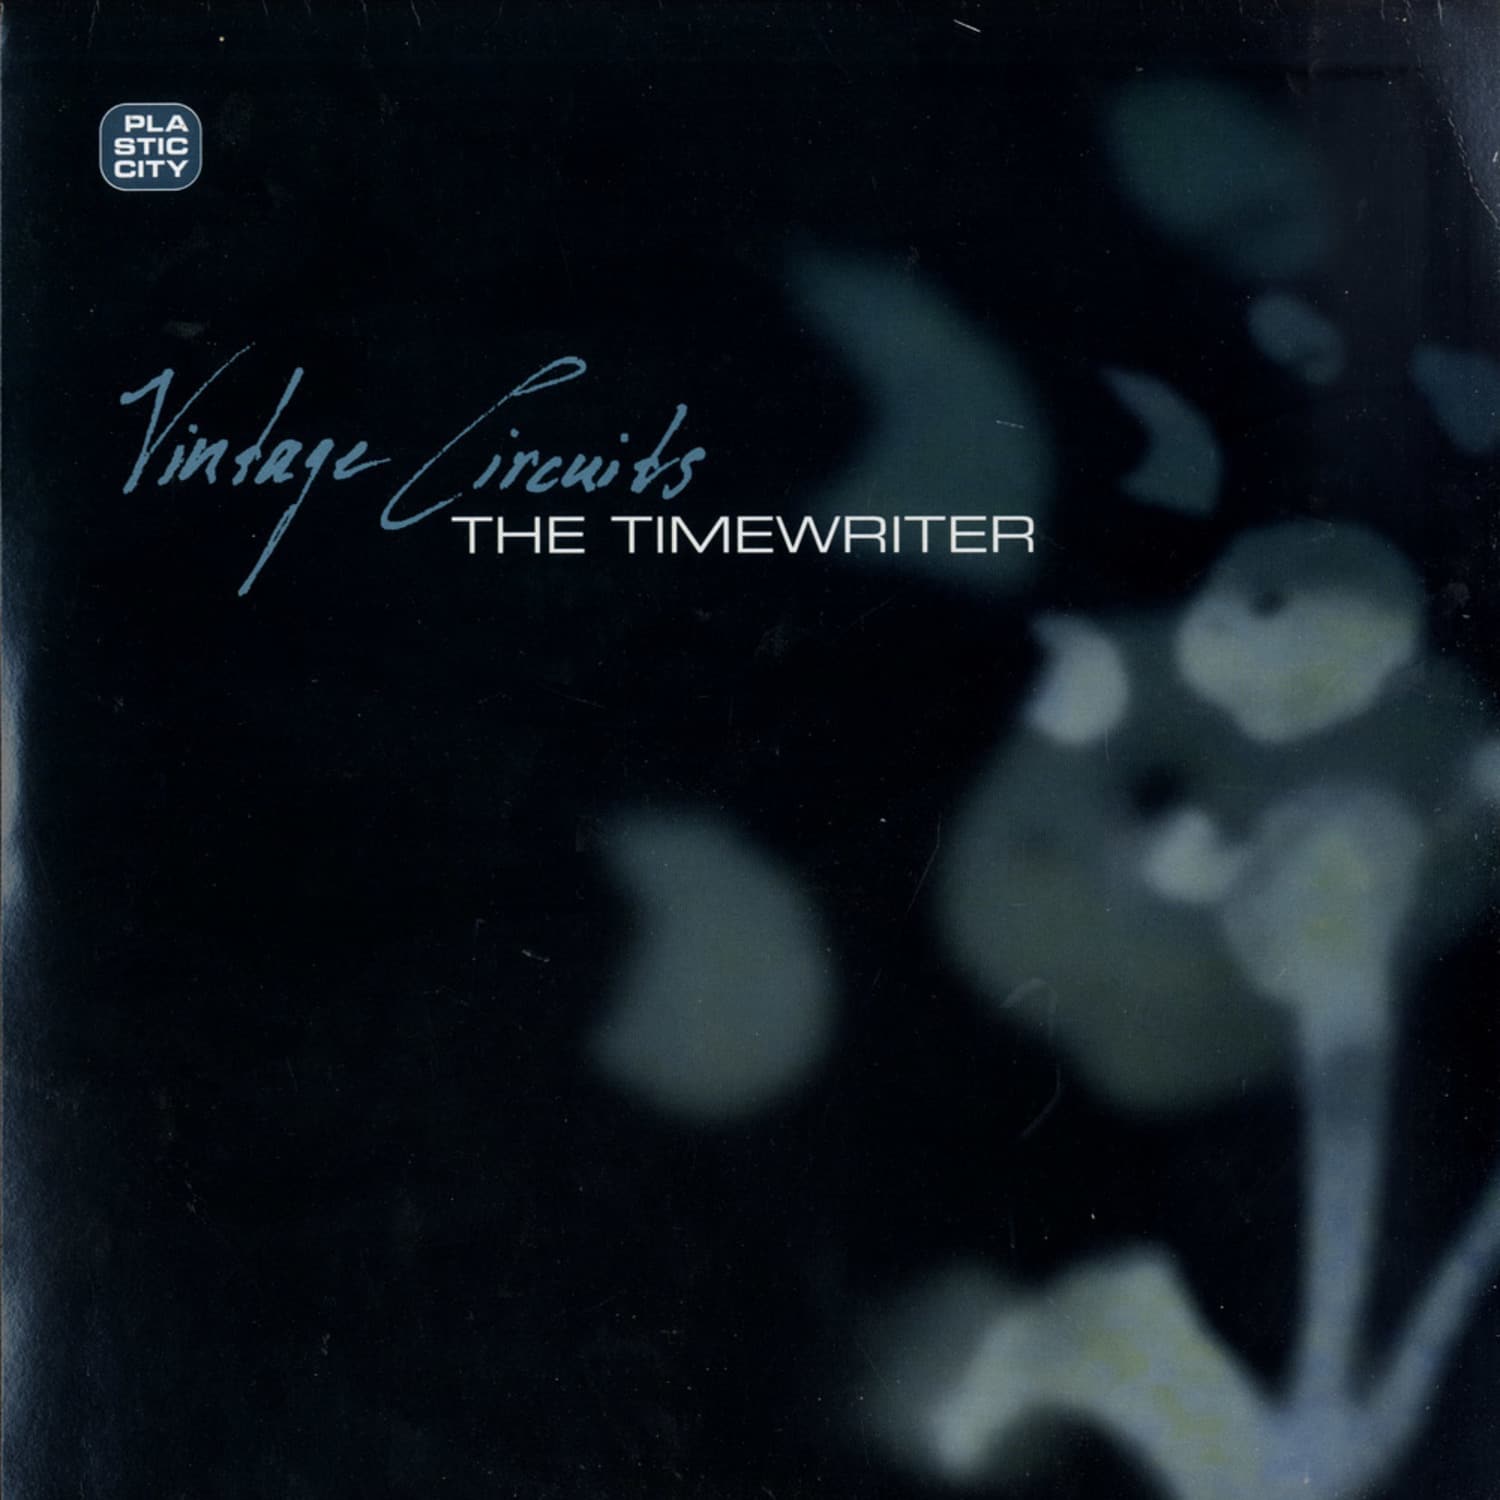 The Timewriter - VINTAGE CIRCUITS